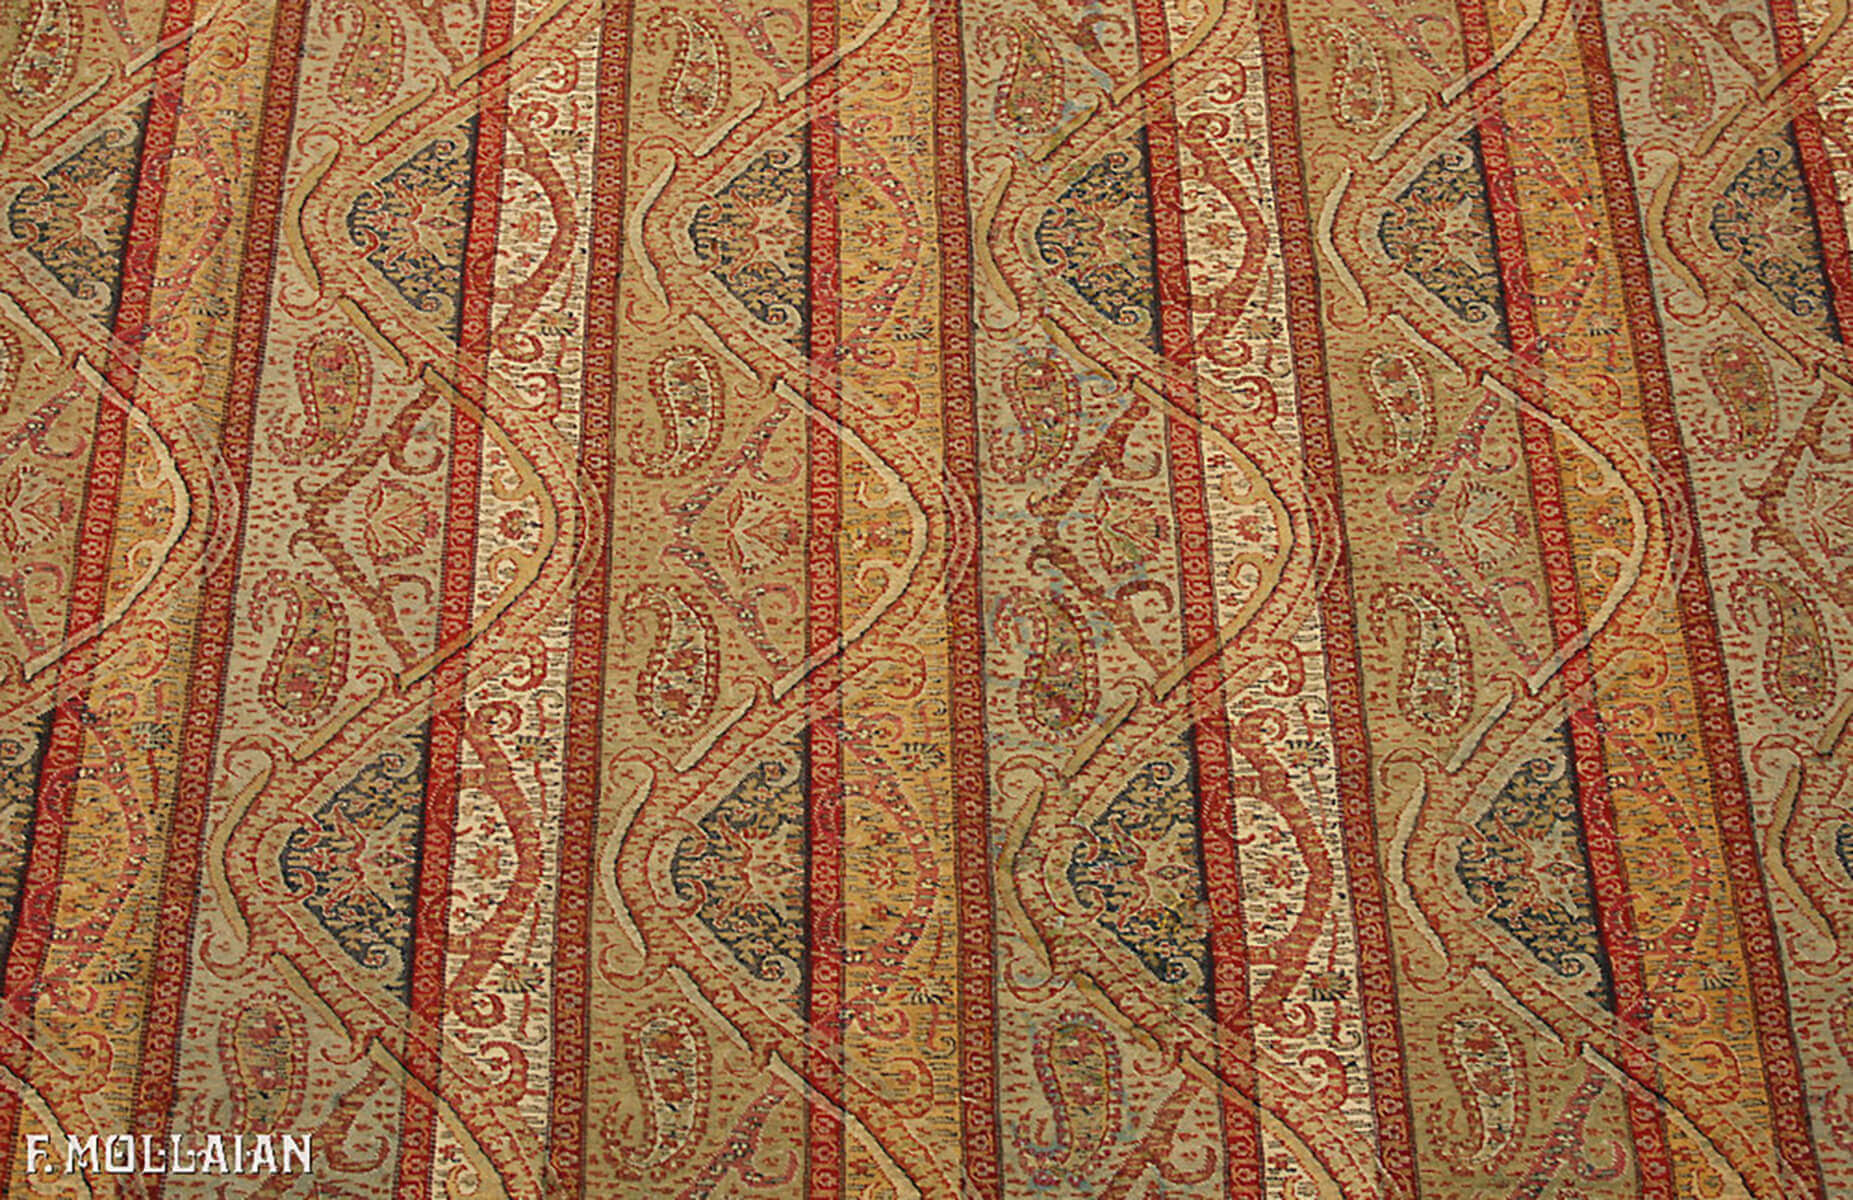 Antique Indian Textile Kashmir Shawl n°:21831954